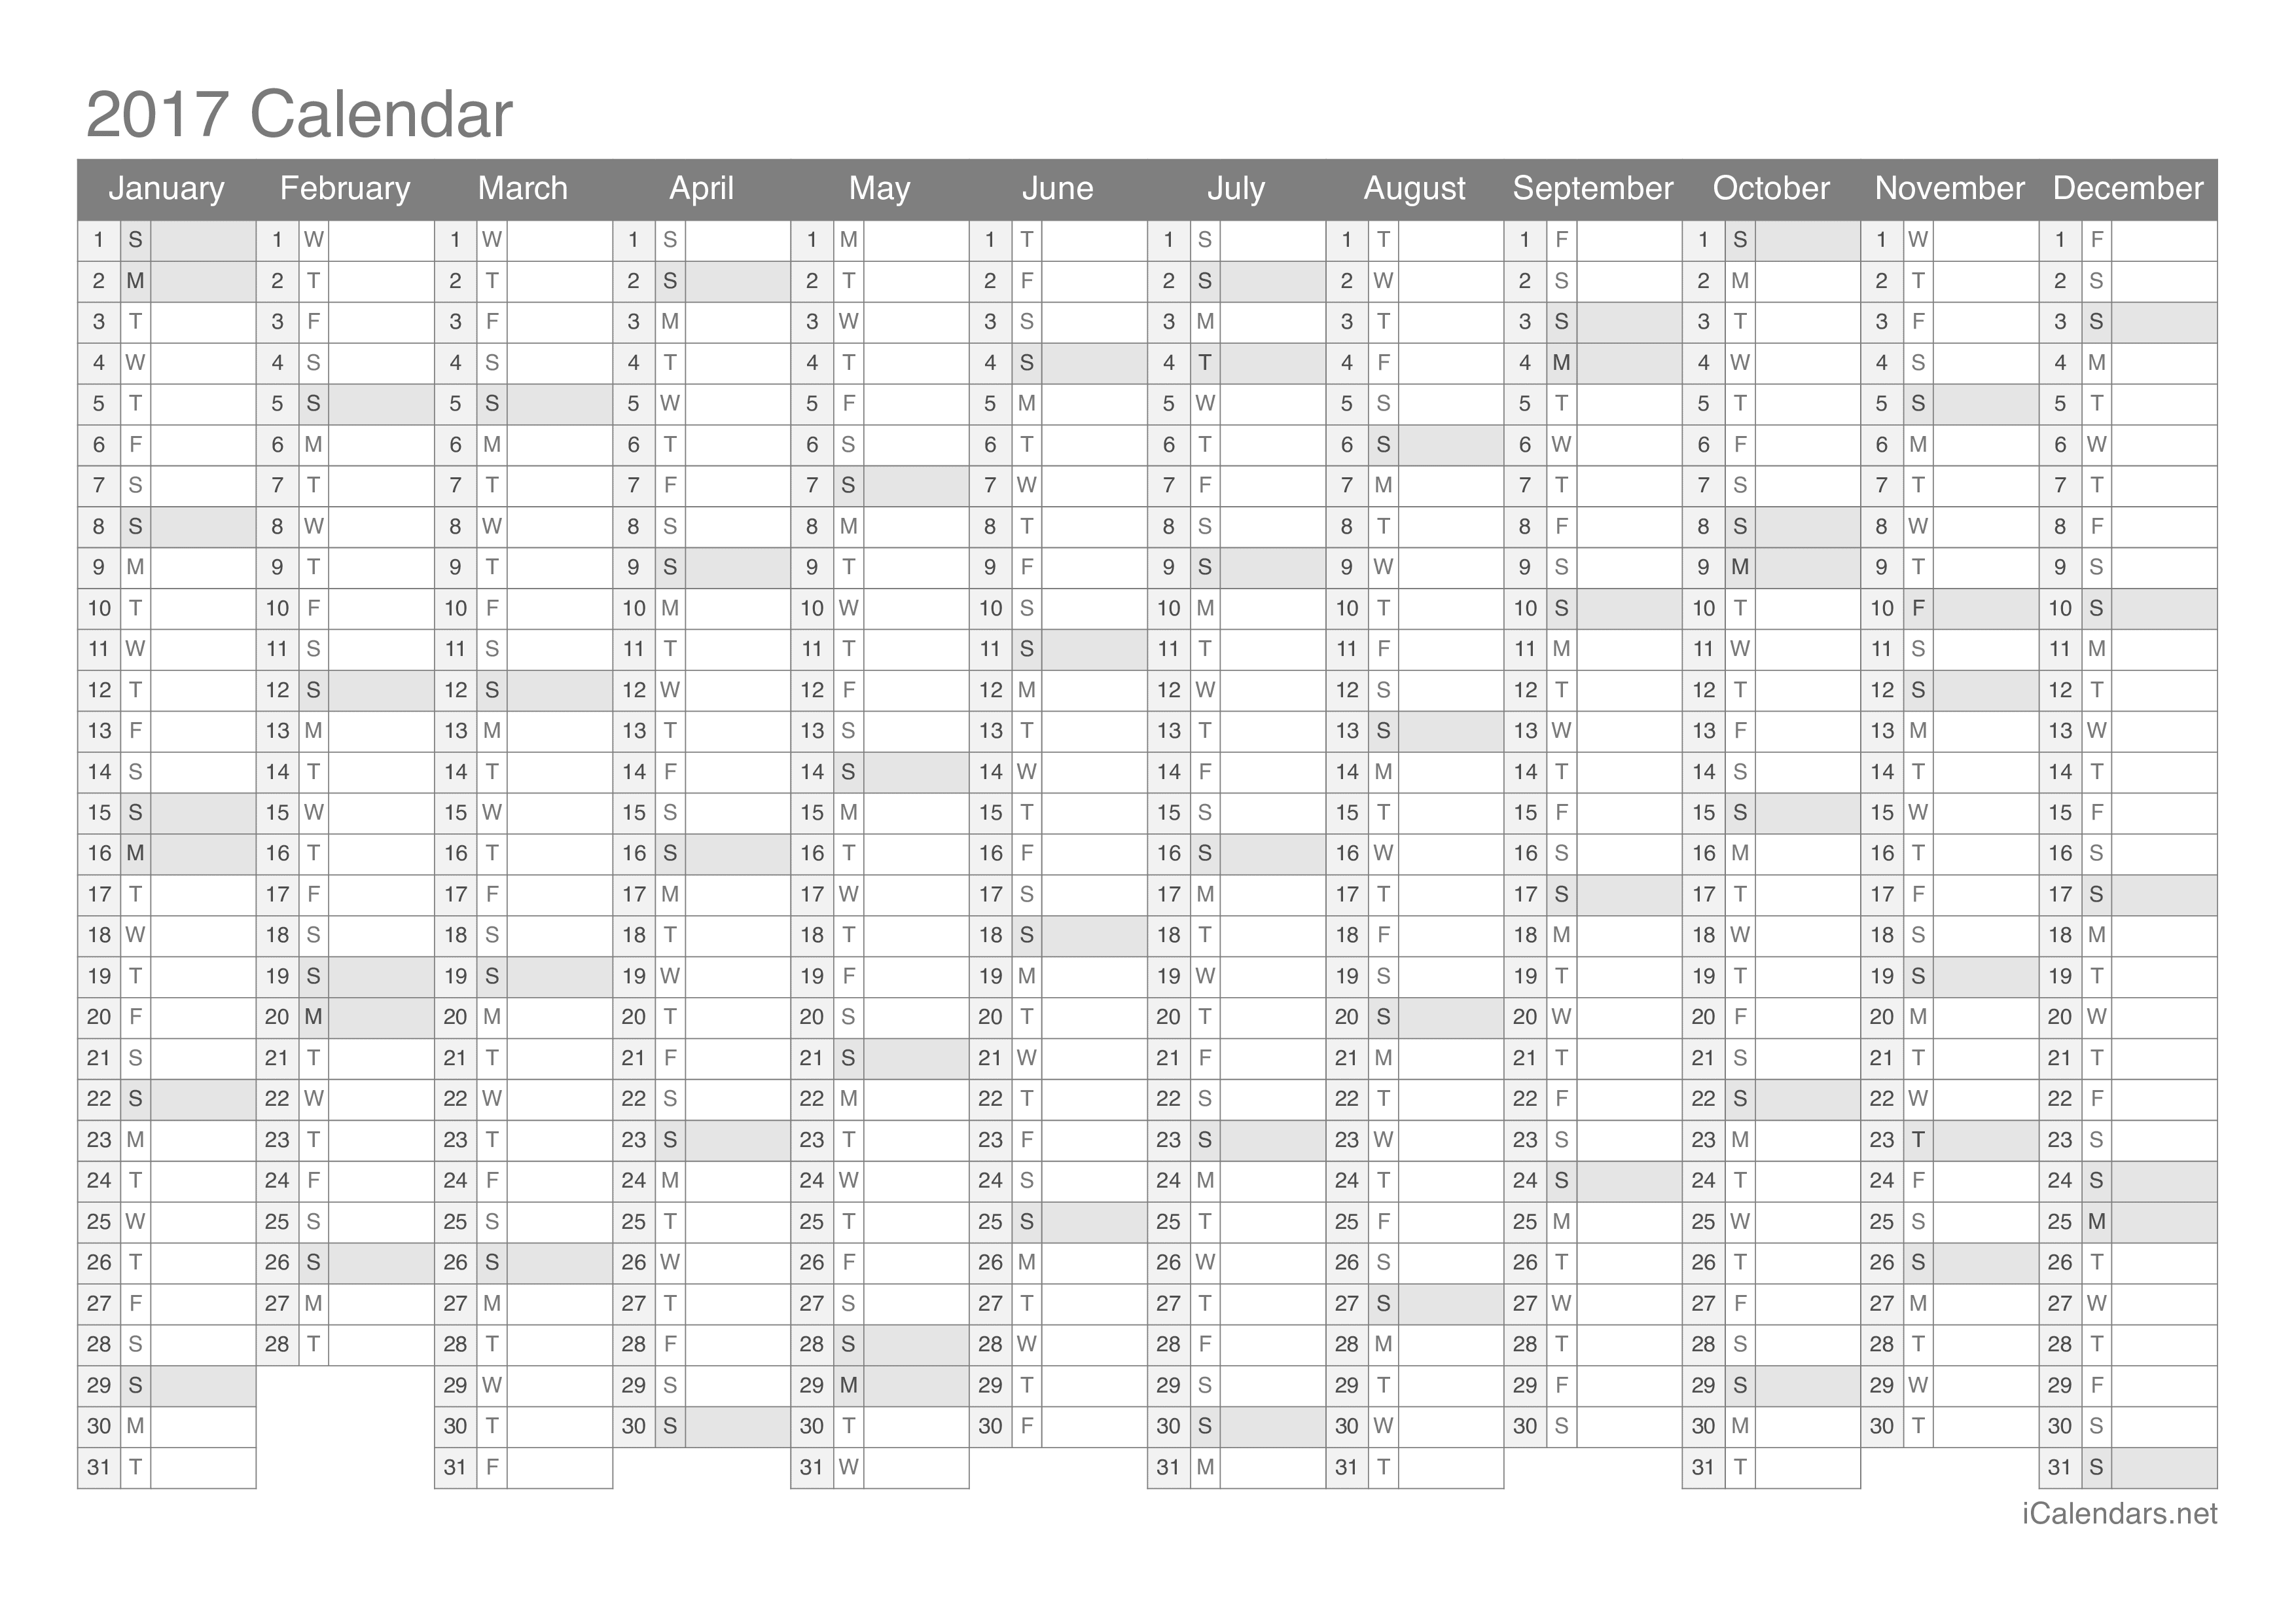 2017 Printable Calendar - PDF or Excel - icalendars.net